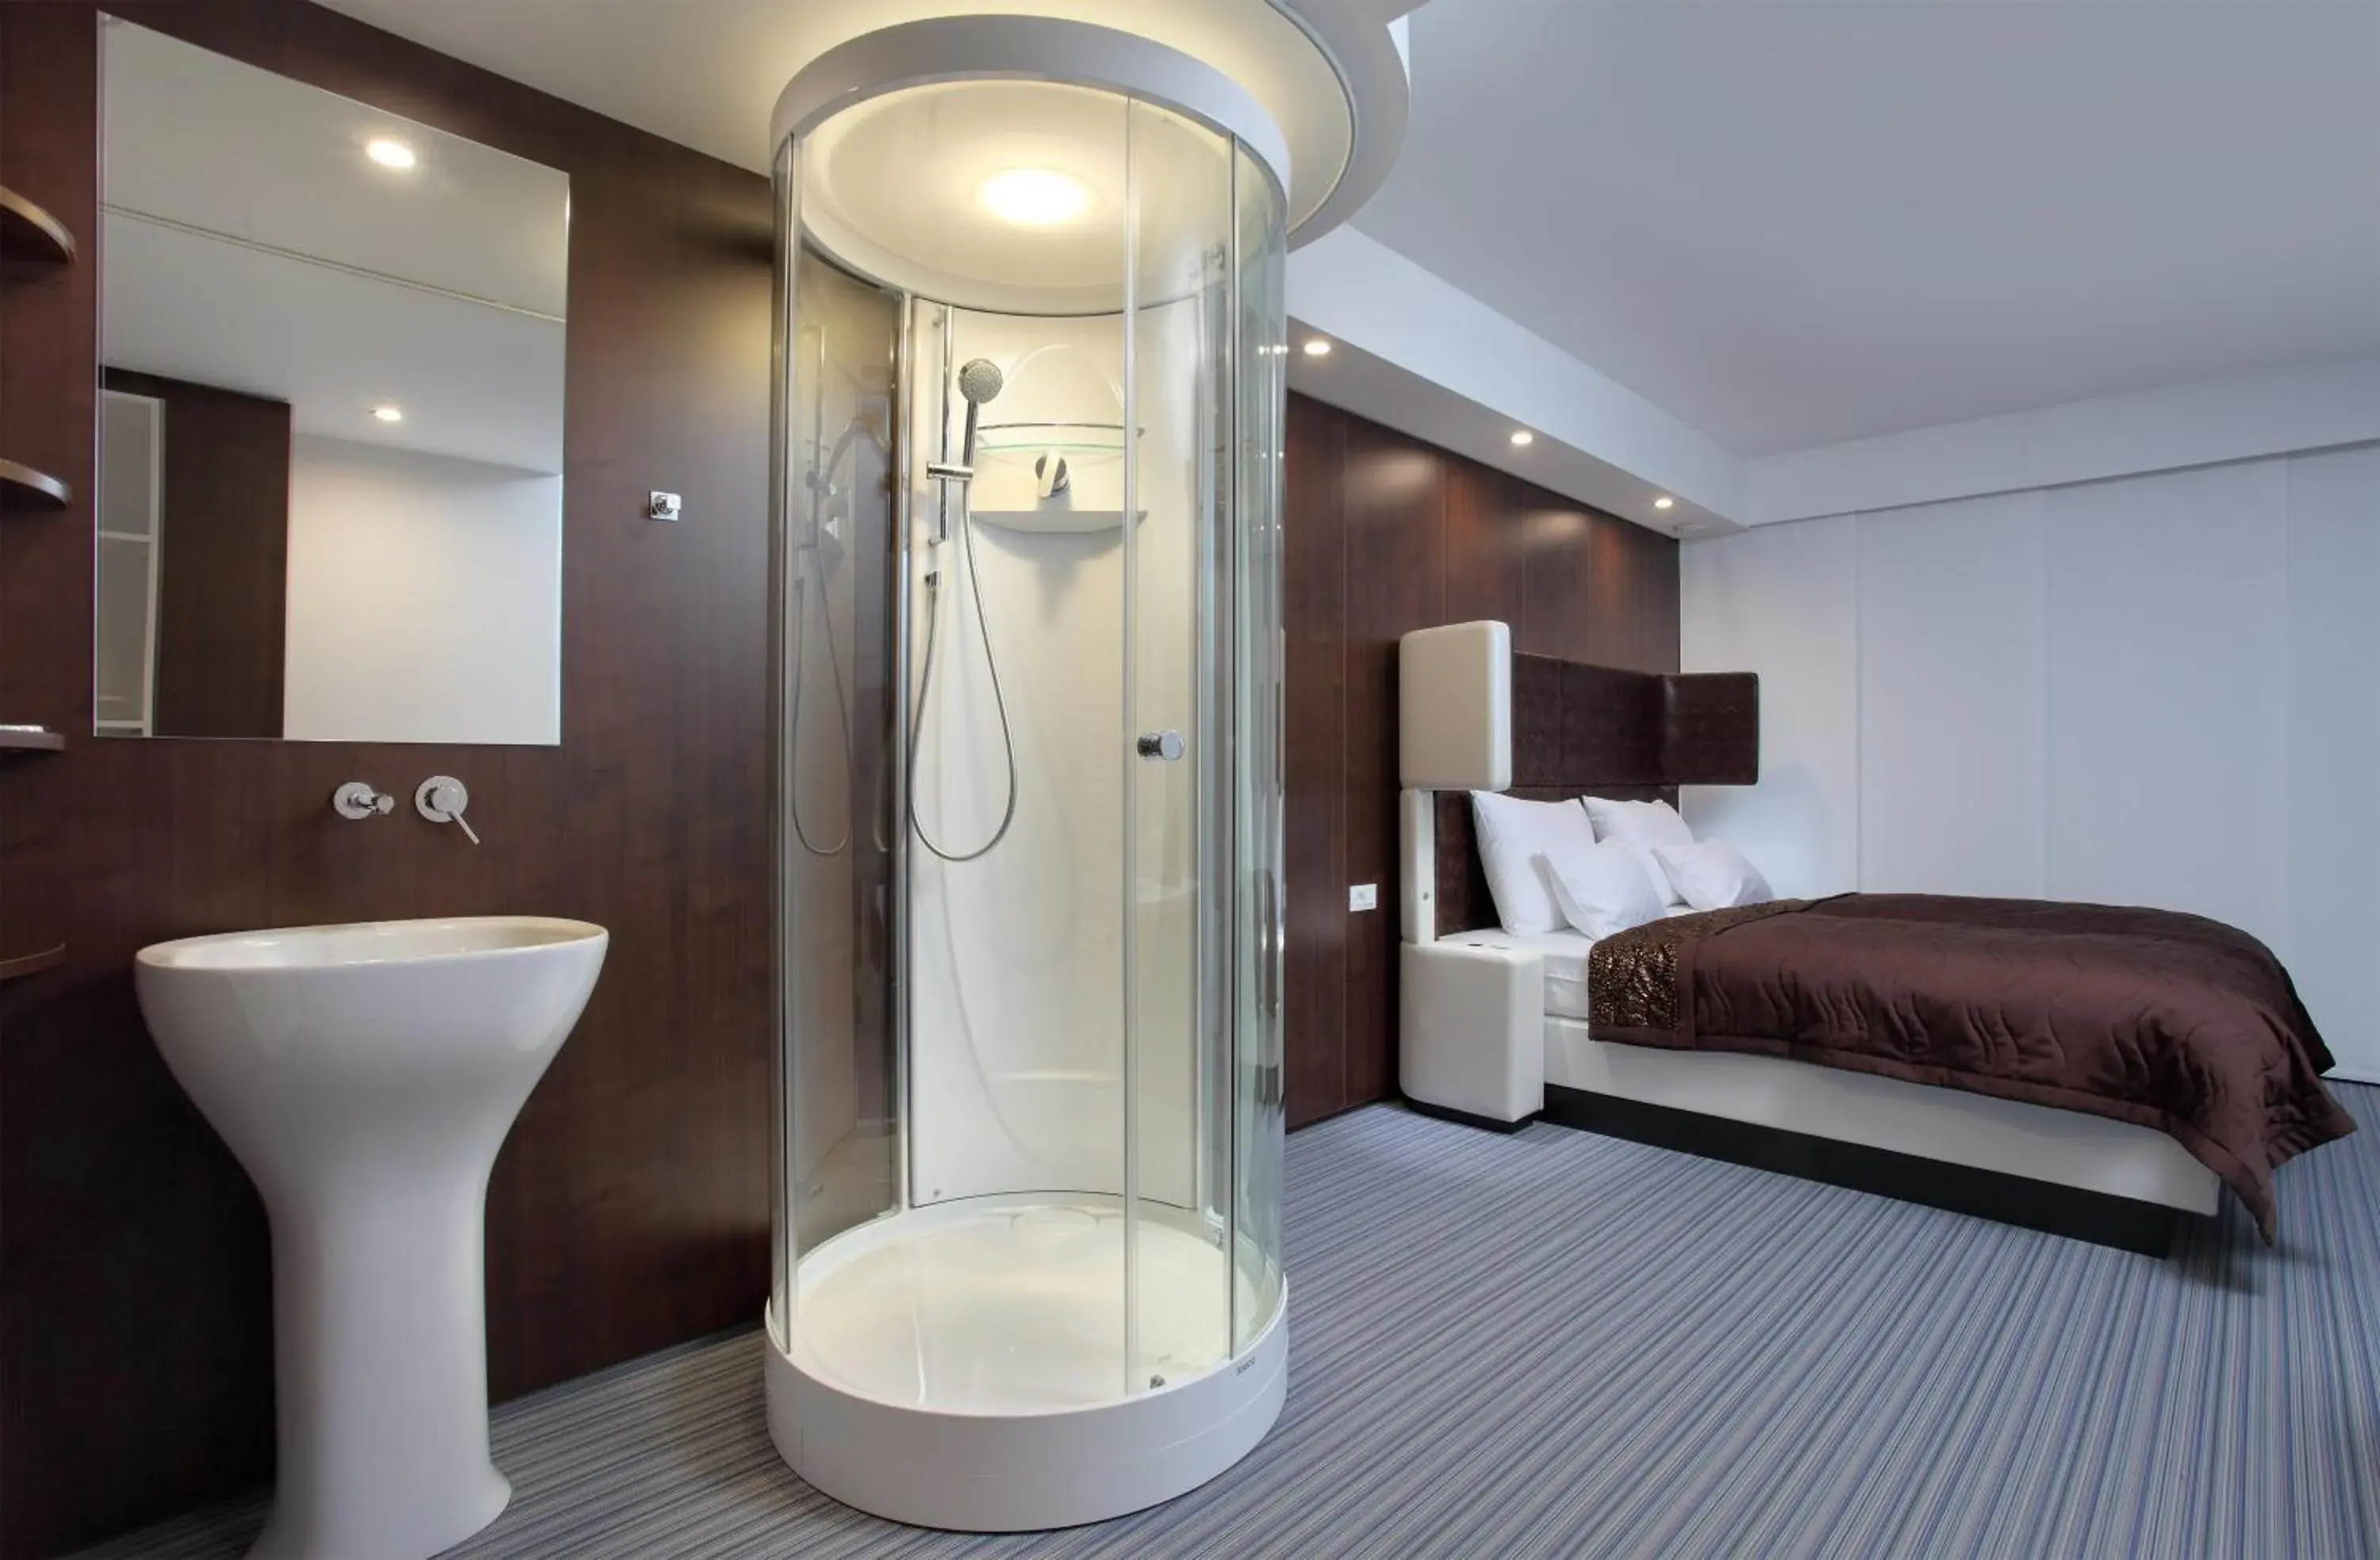 Photo of the whole room, Bathroom in Hotel Nox